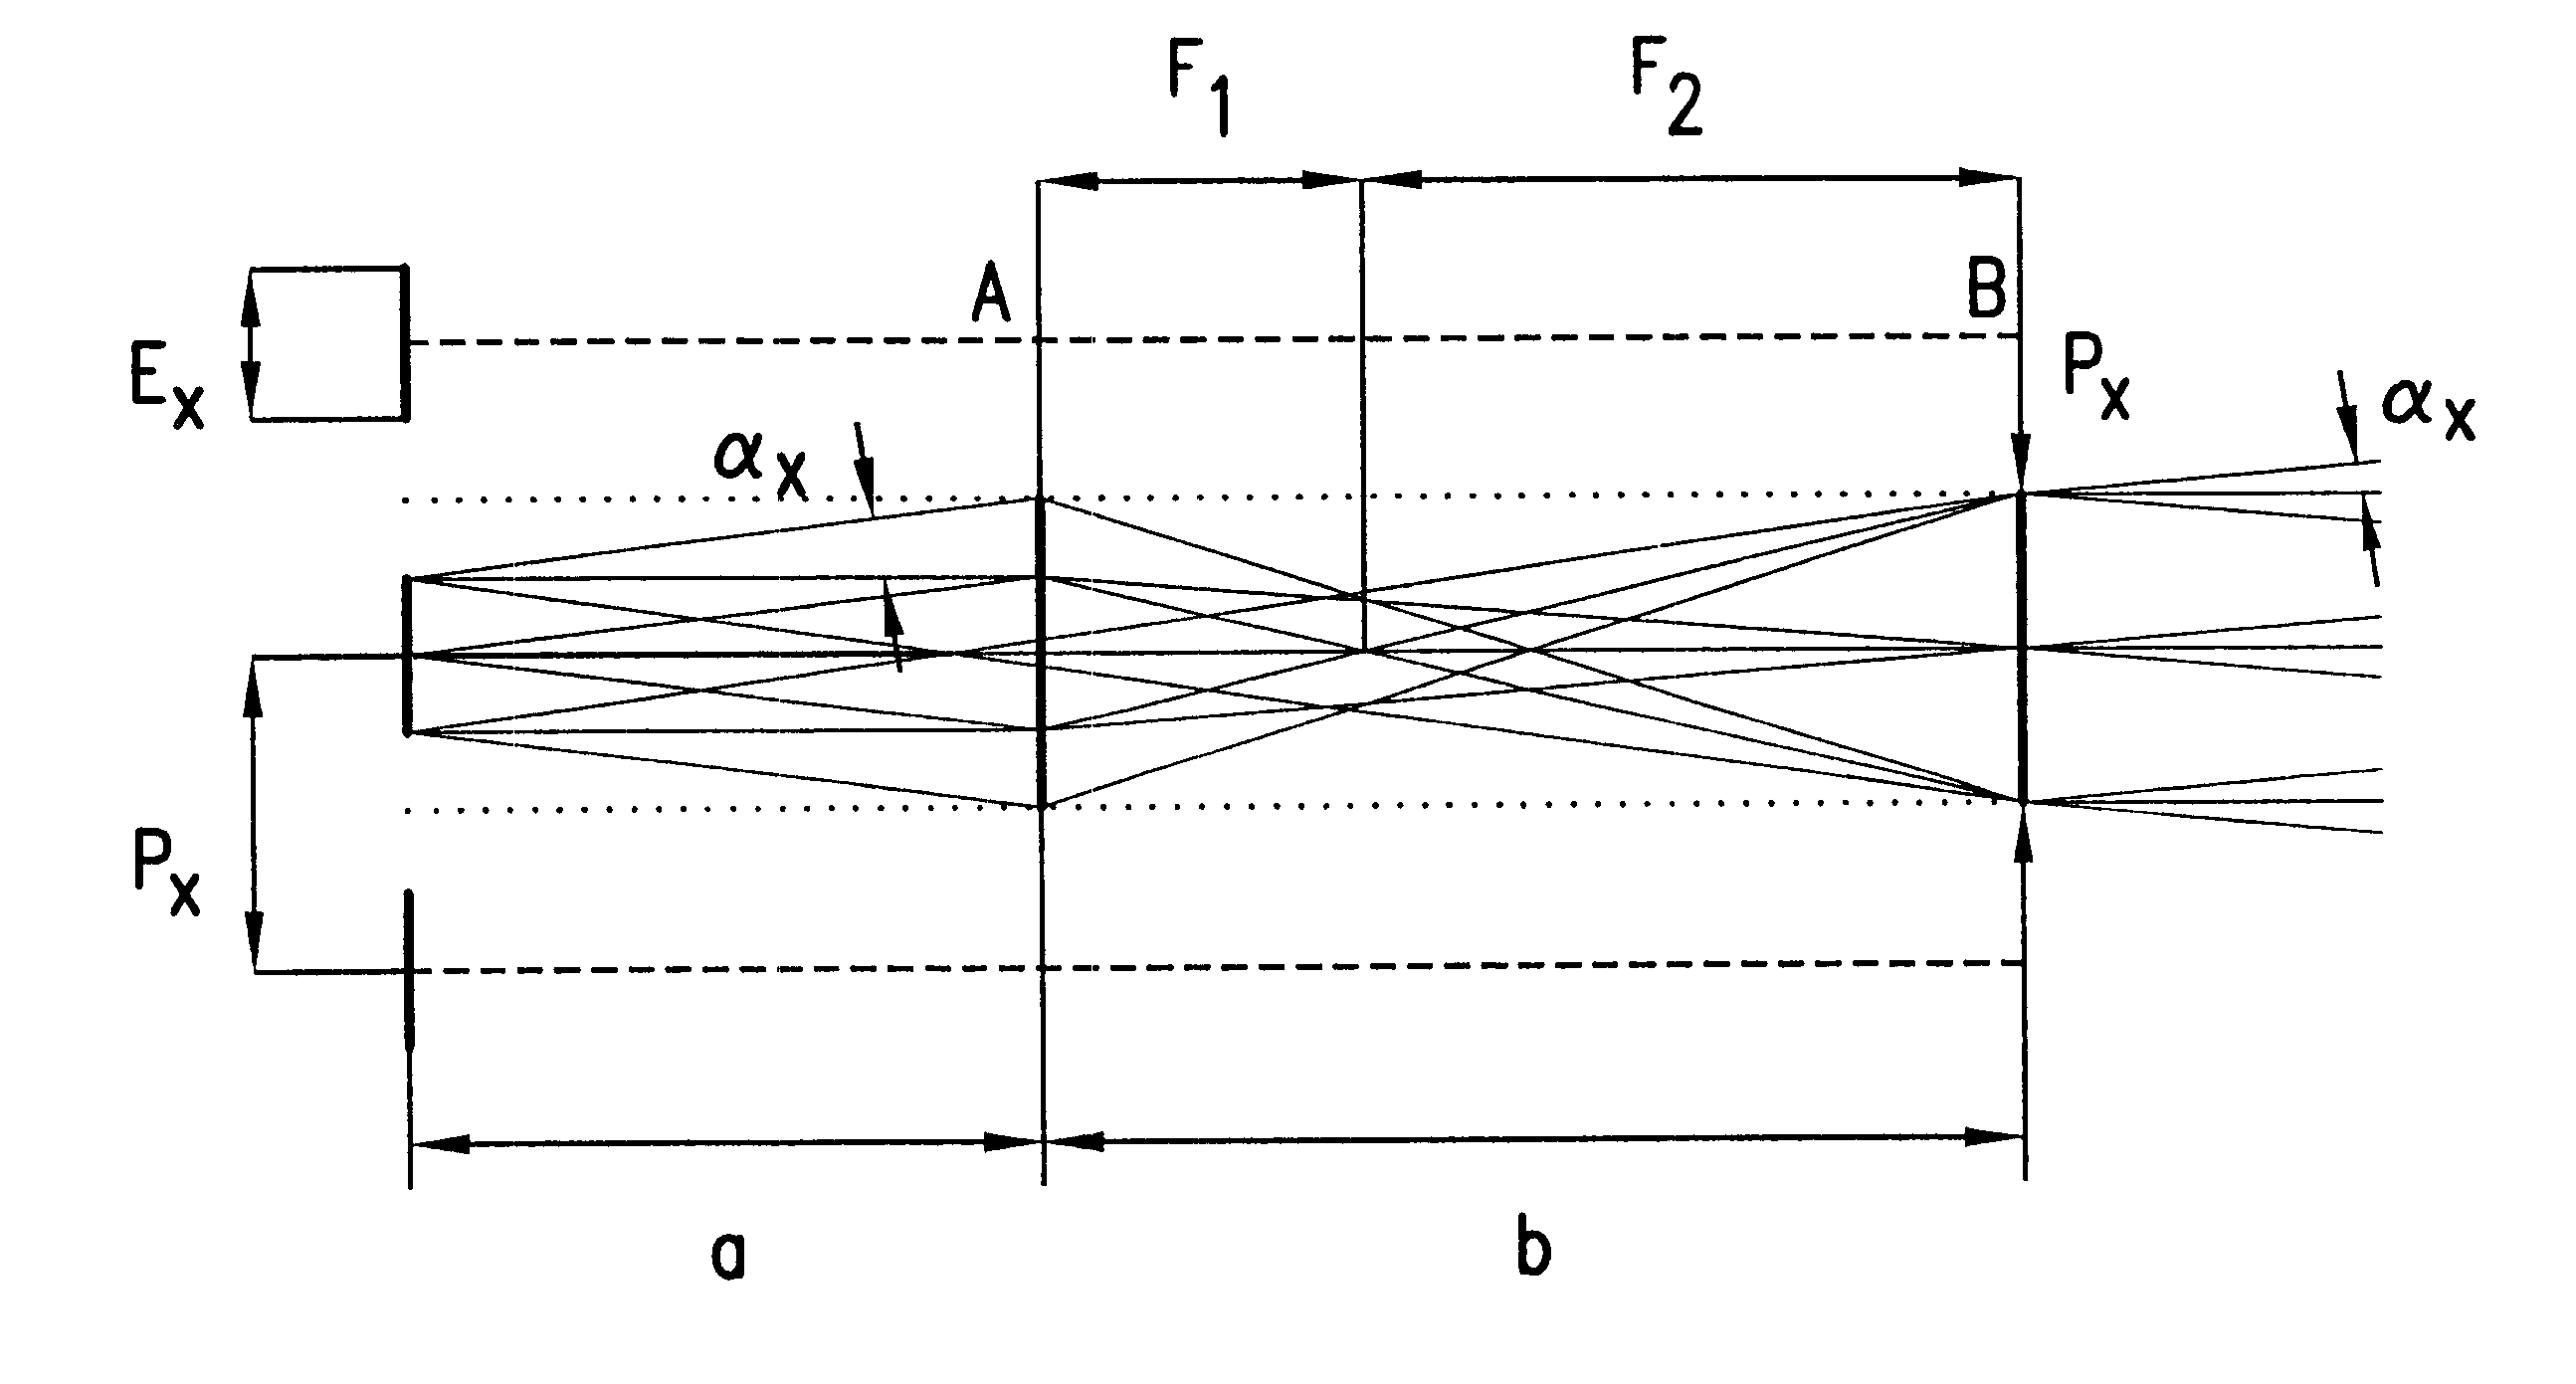 Optical emitter array with collimating optics unit